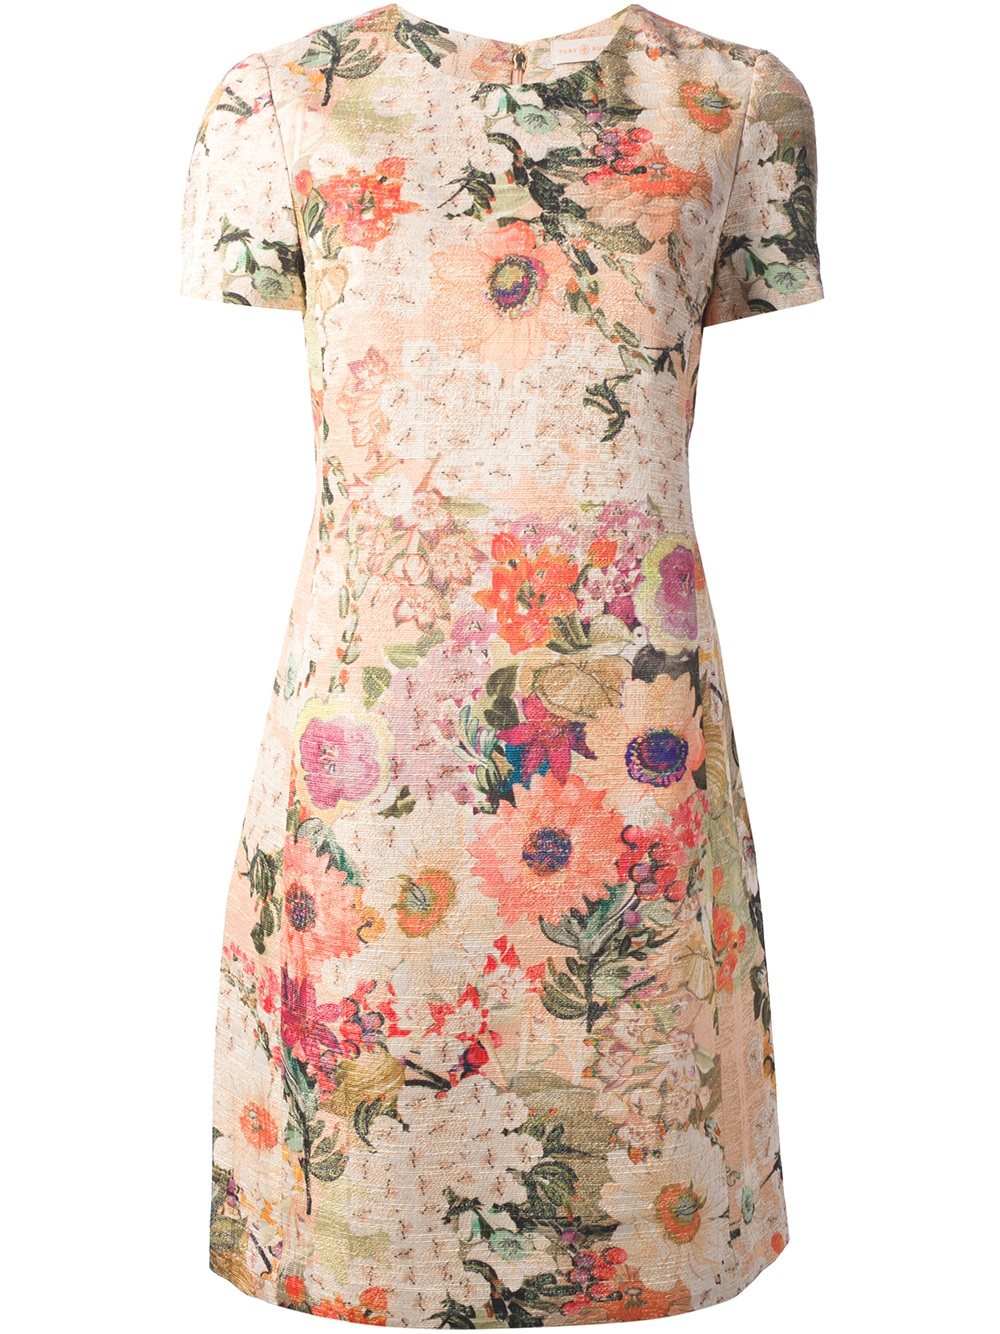 Tory burch Floral Print Dress | Lyst